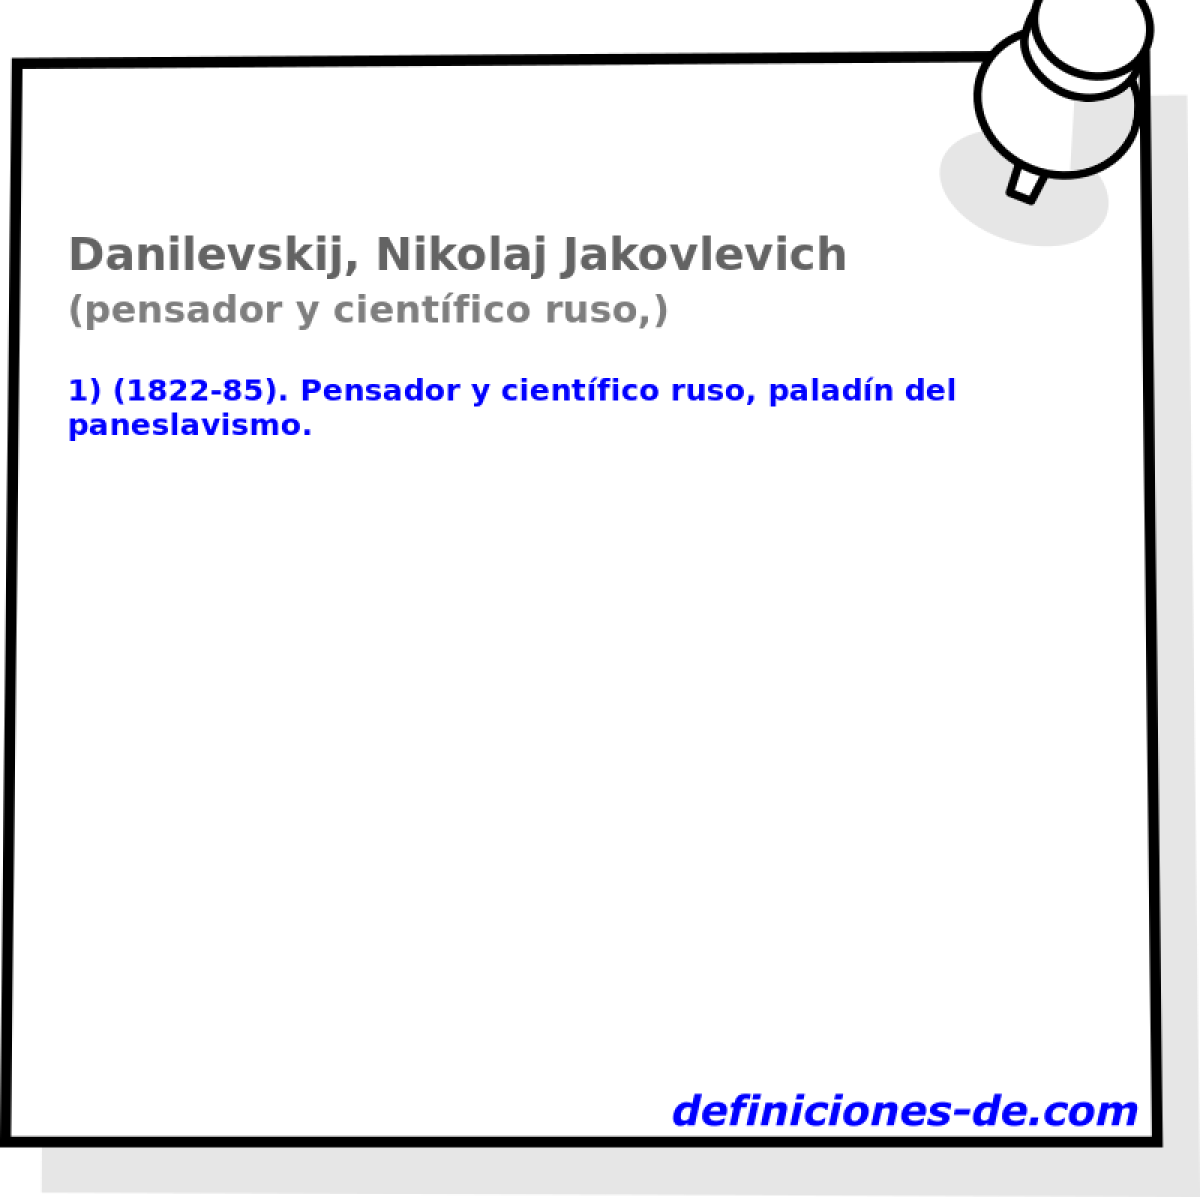 Danilevskij, Nikolaj Jakovlevich (pensador y cientfico ruso,)